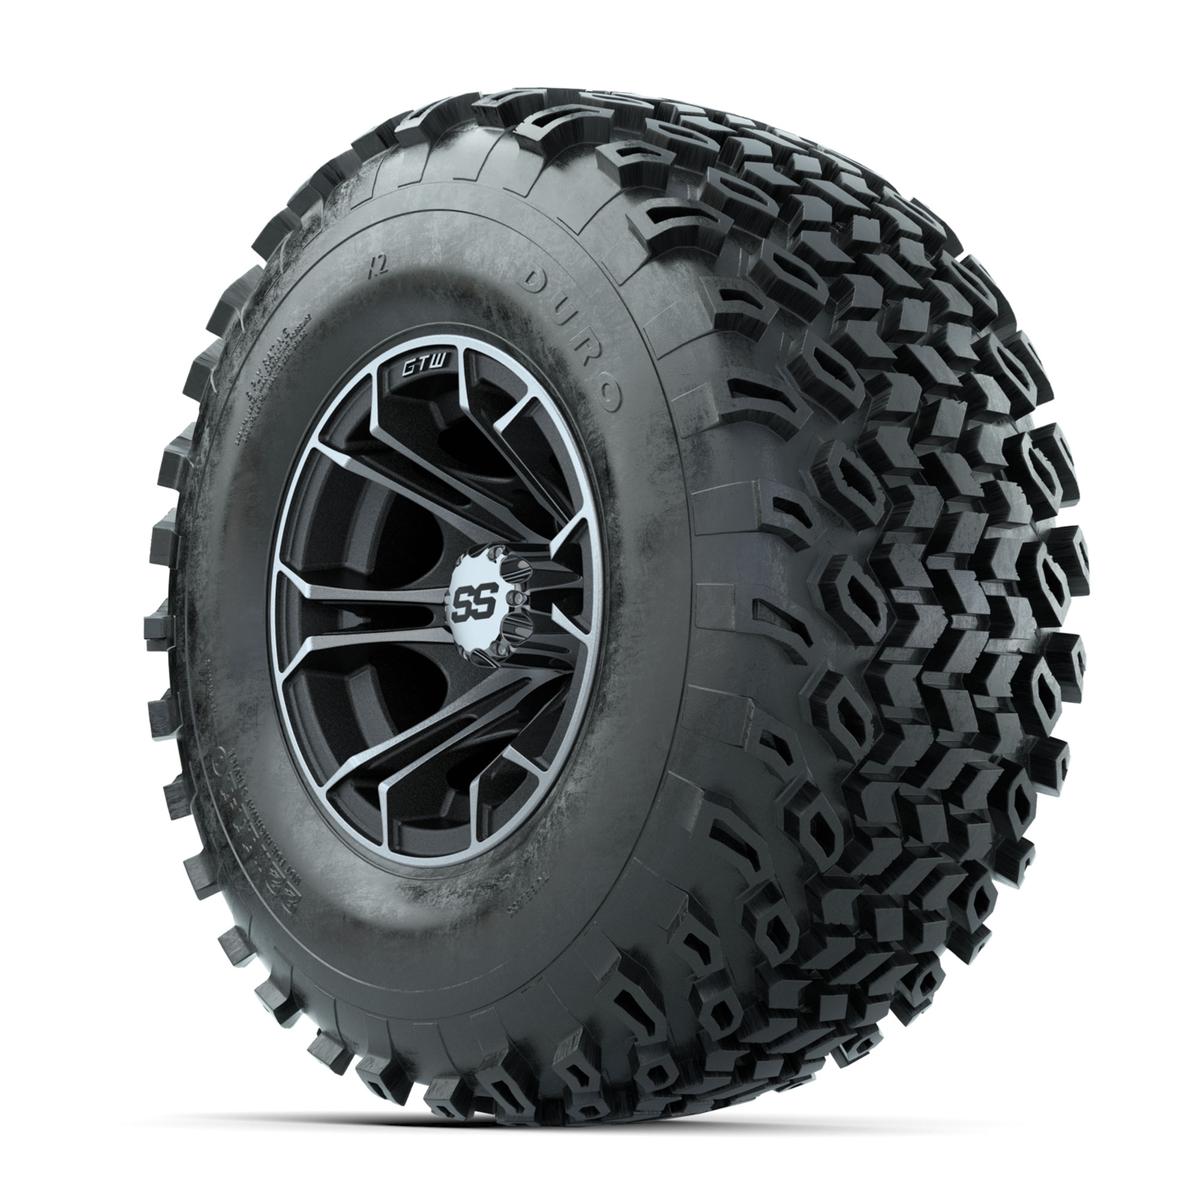 GTW Spyder Machined/Matte Grey 10 in Wheels with 22x11-10 Duro Desert All Terrain Tires – Full Set